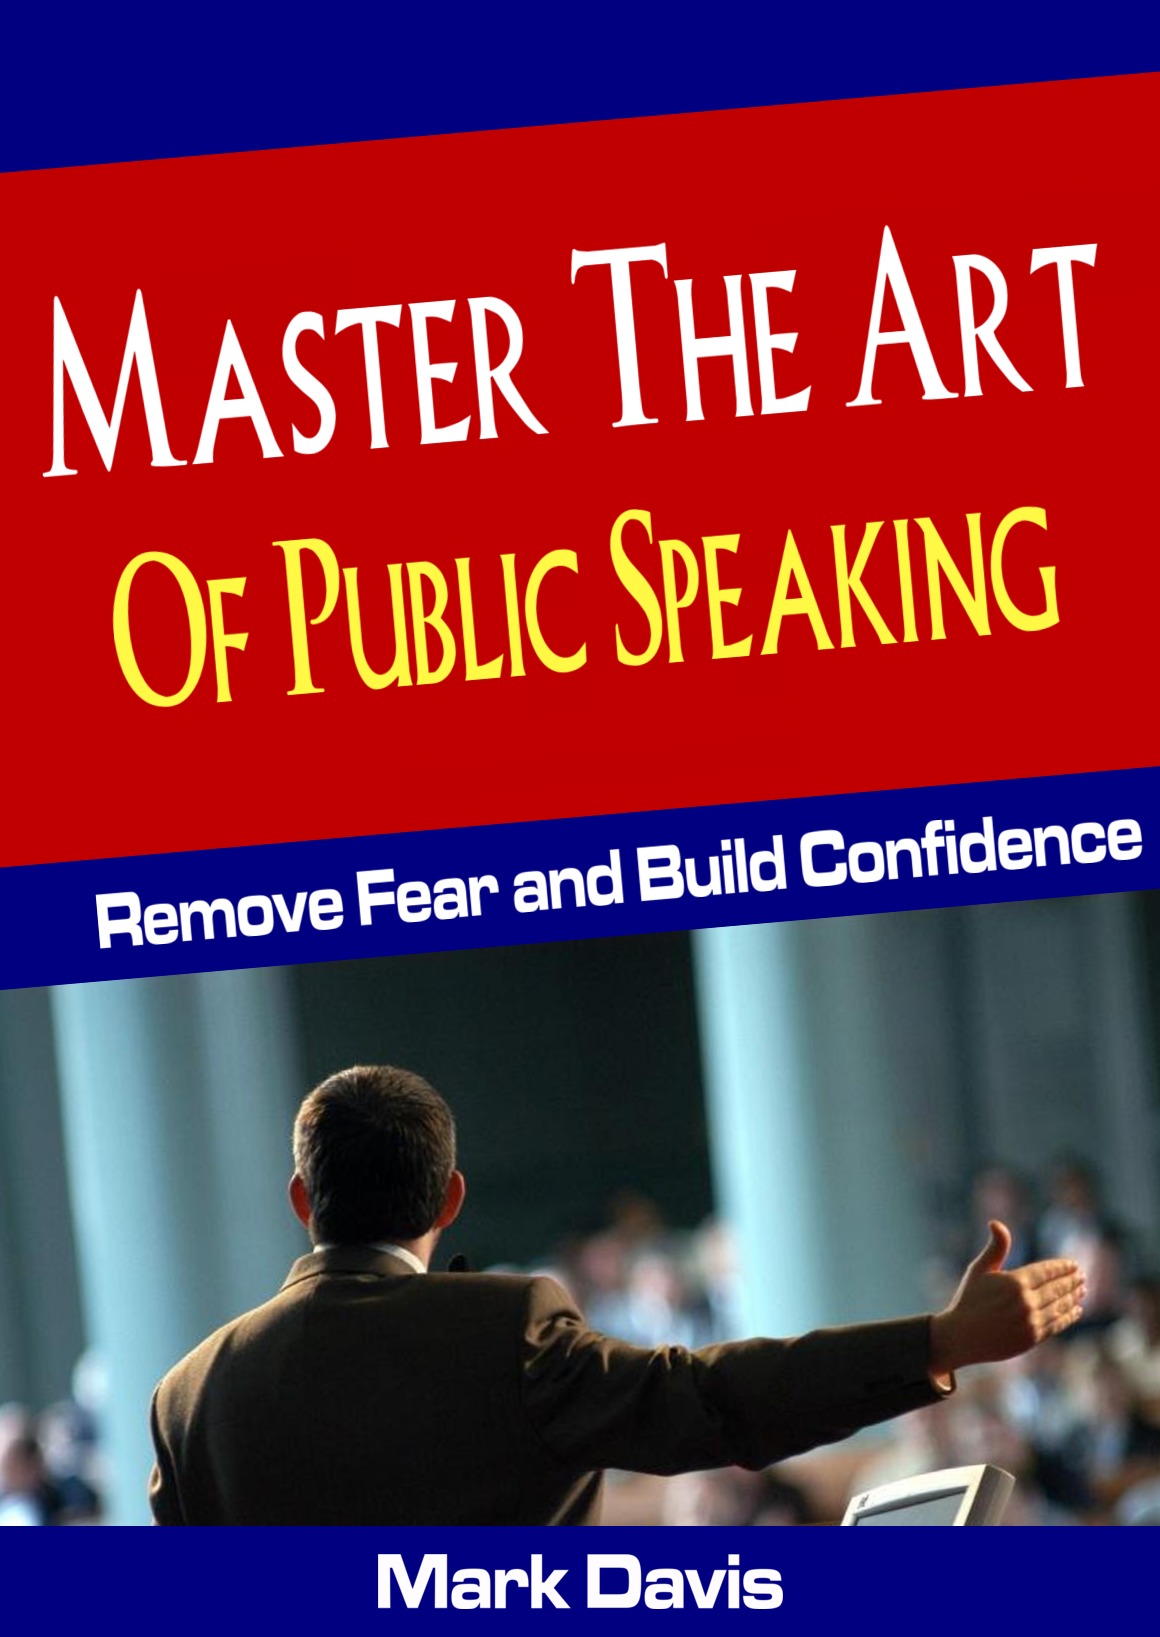 Master The Art of Public Speaking by Mark Davis